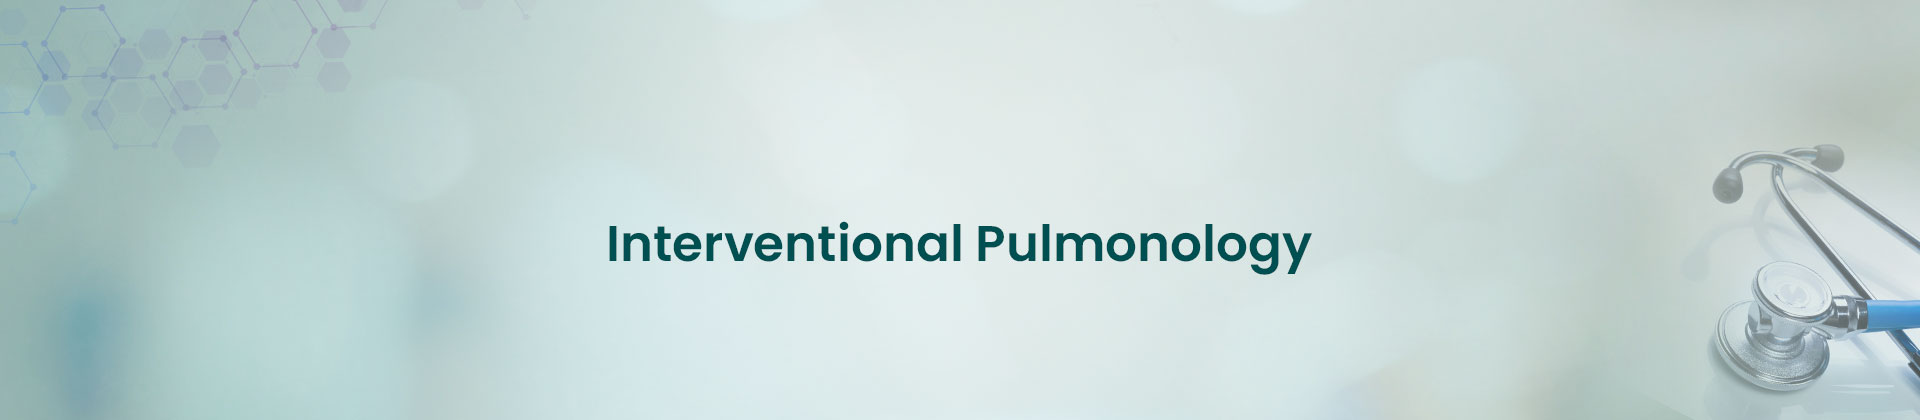 Interventional Pulmonology